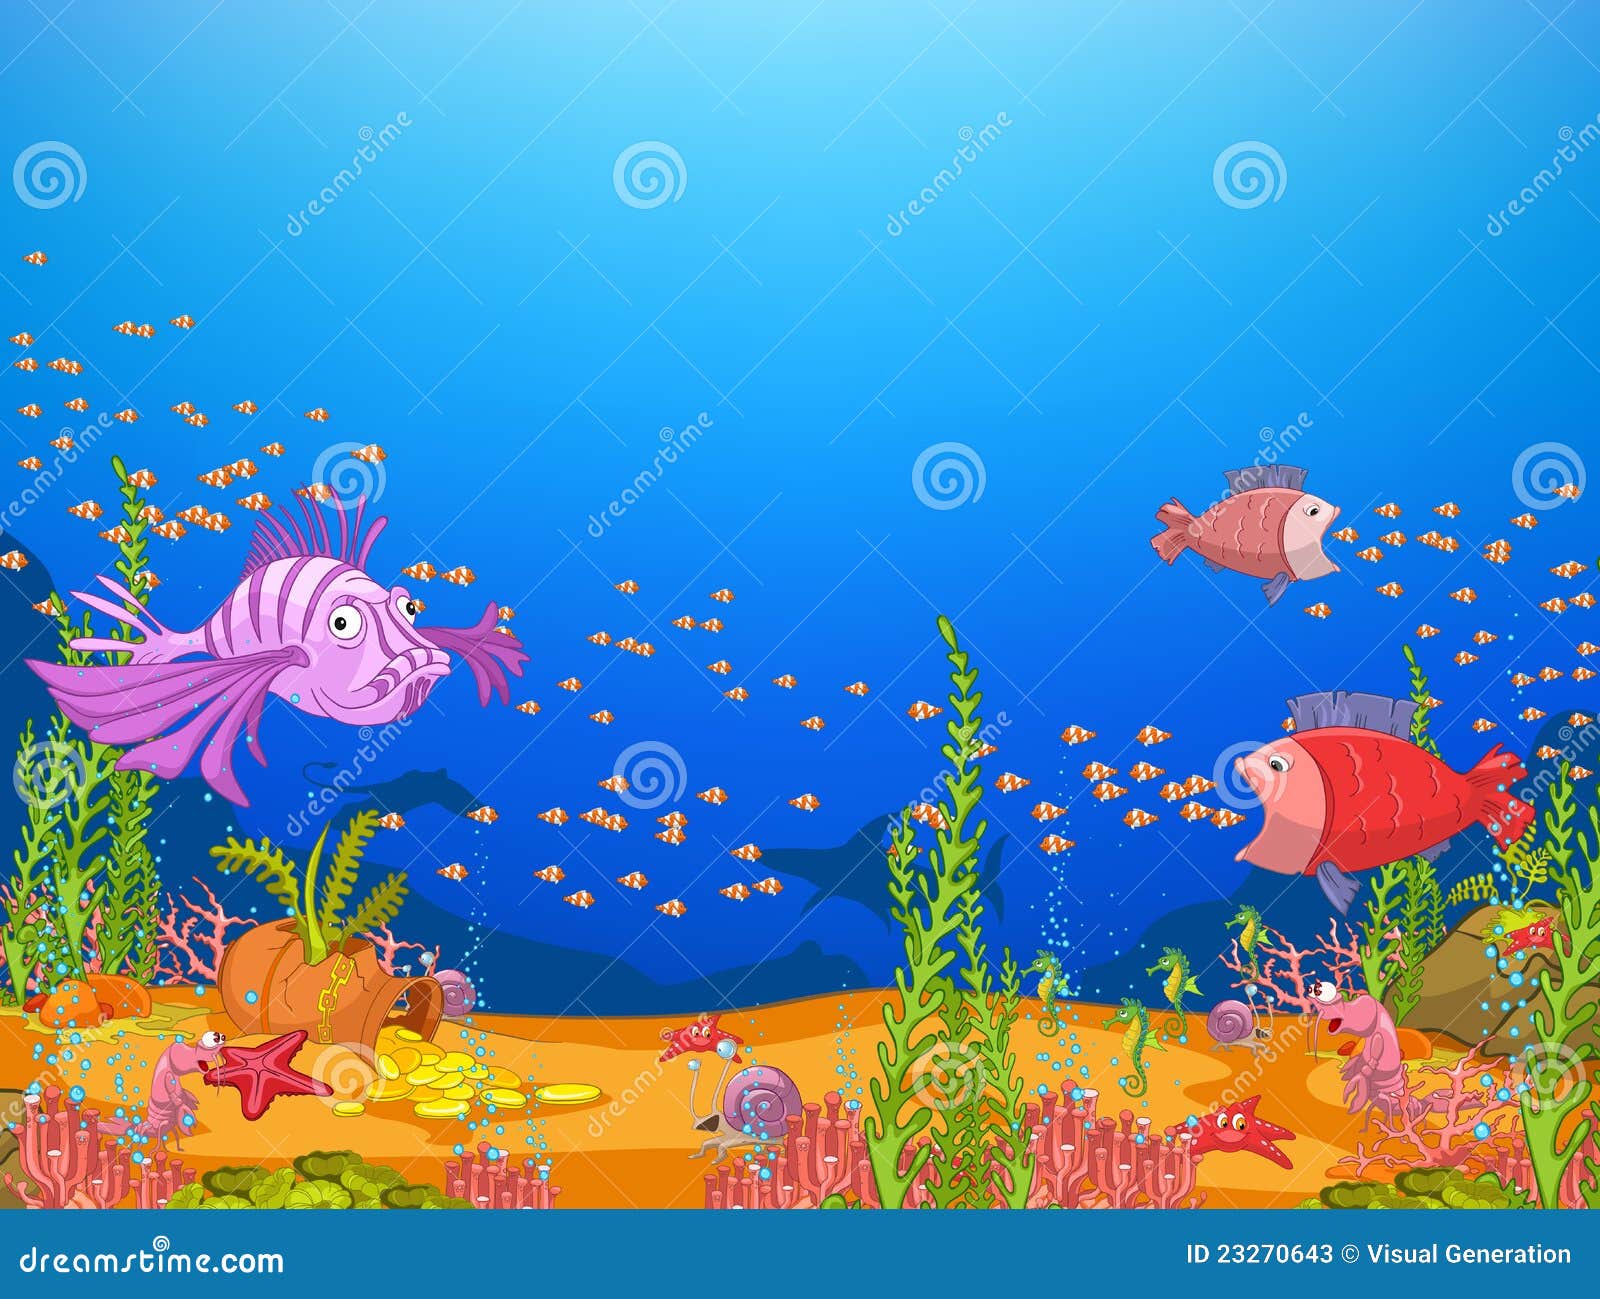 animated underwater clipart - photo #27